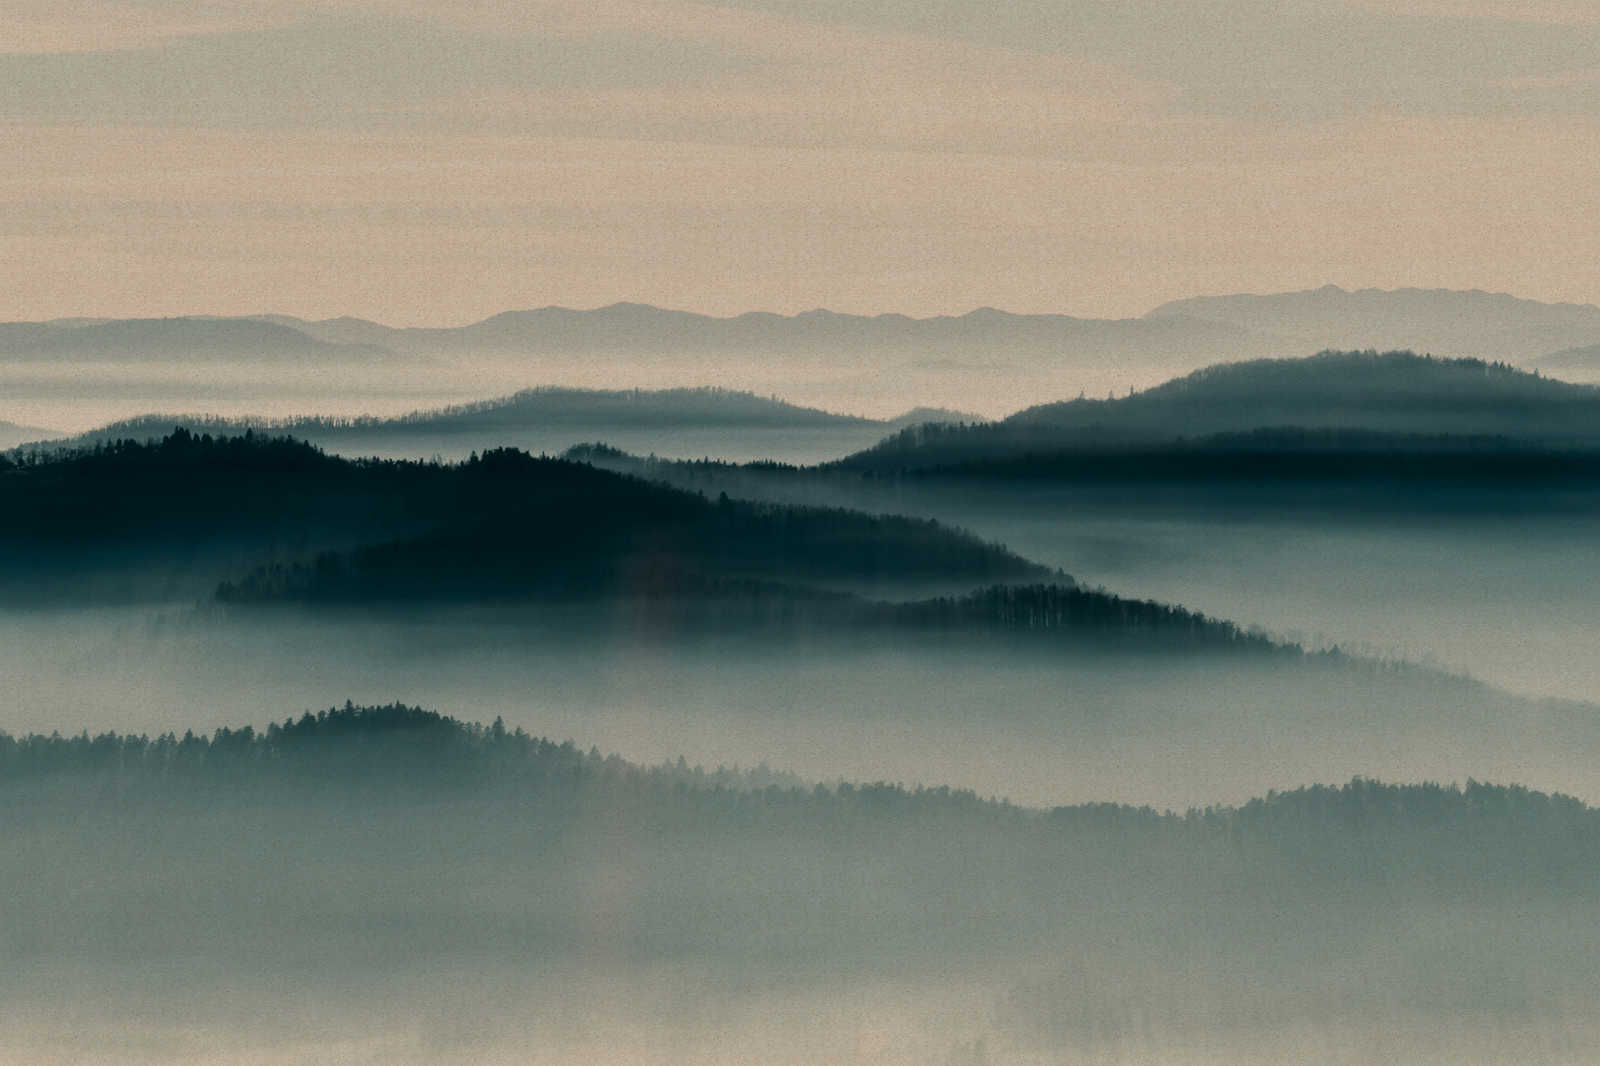             Horizon 1 - Leinwandbild mit Nebel-Landschaft, Natur Sky Line in Pappe Struktur – 0,90 m x 0,60 m
        